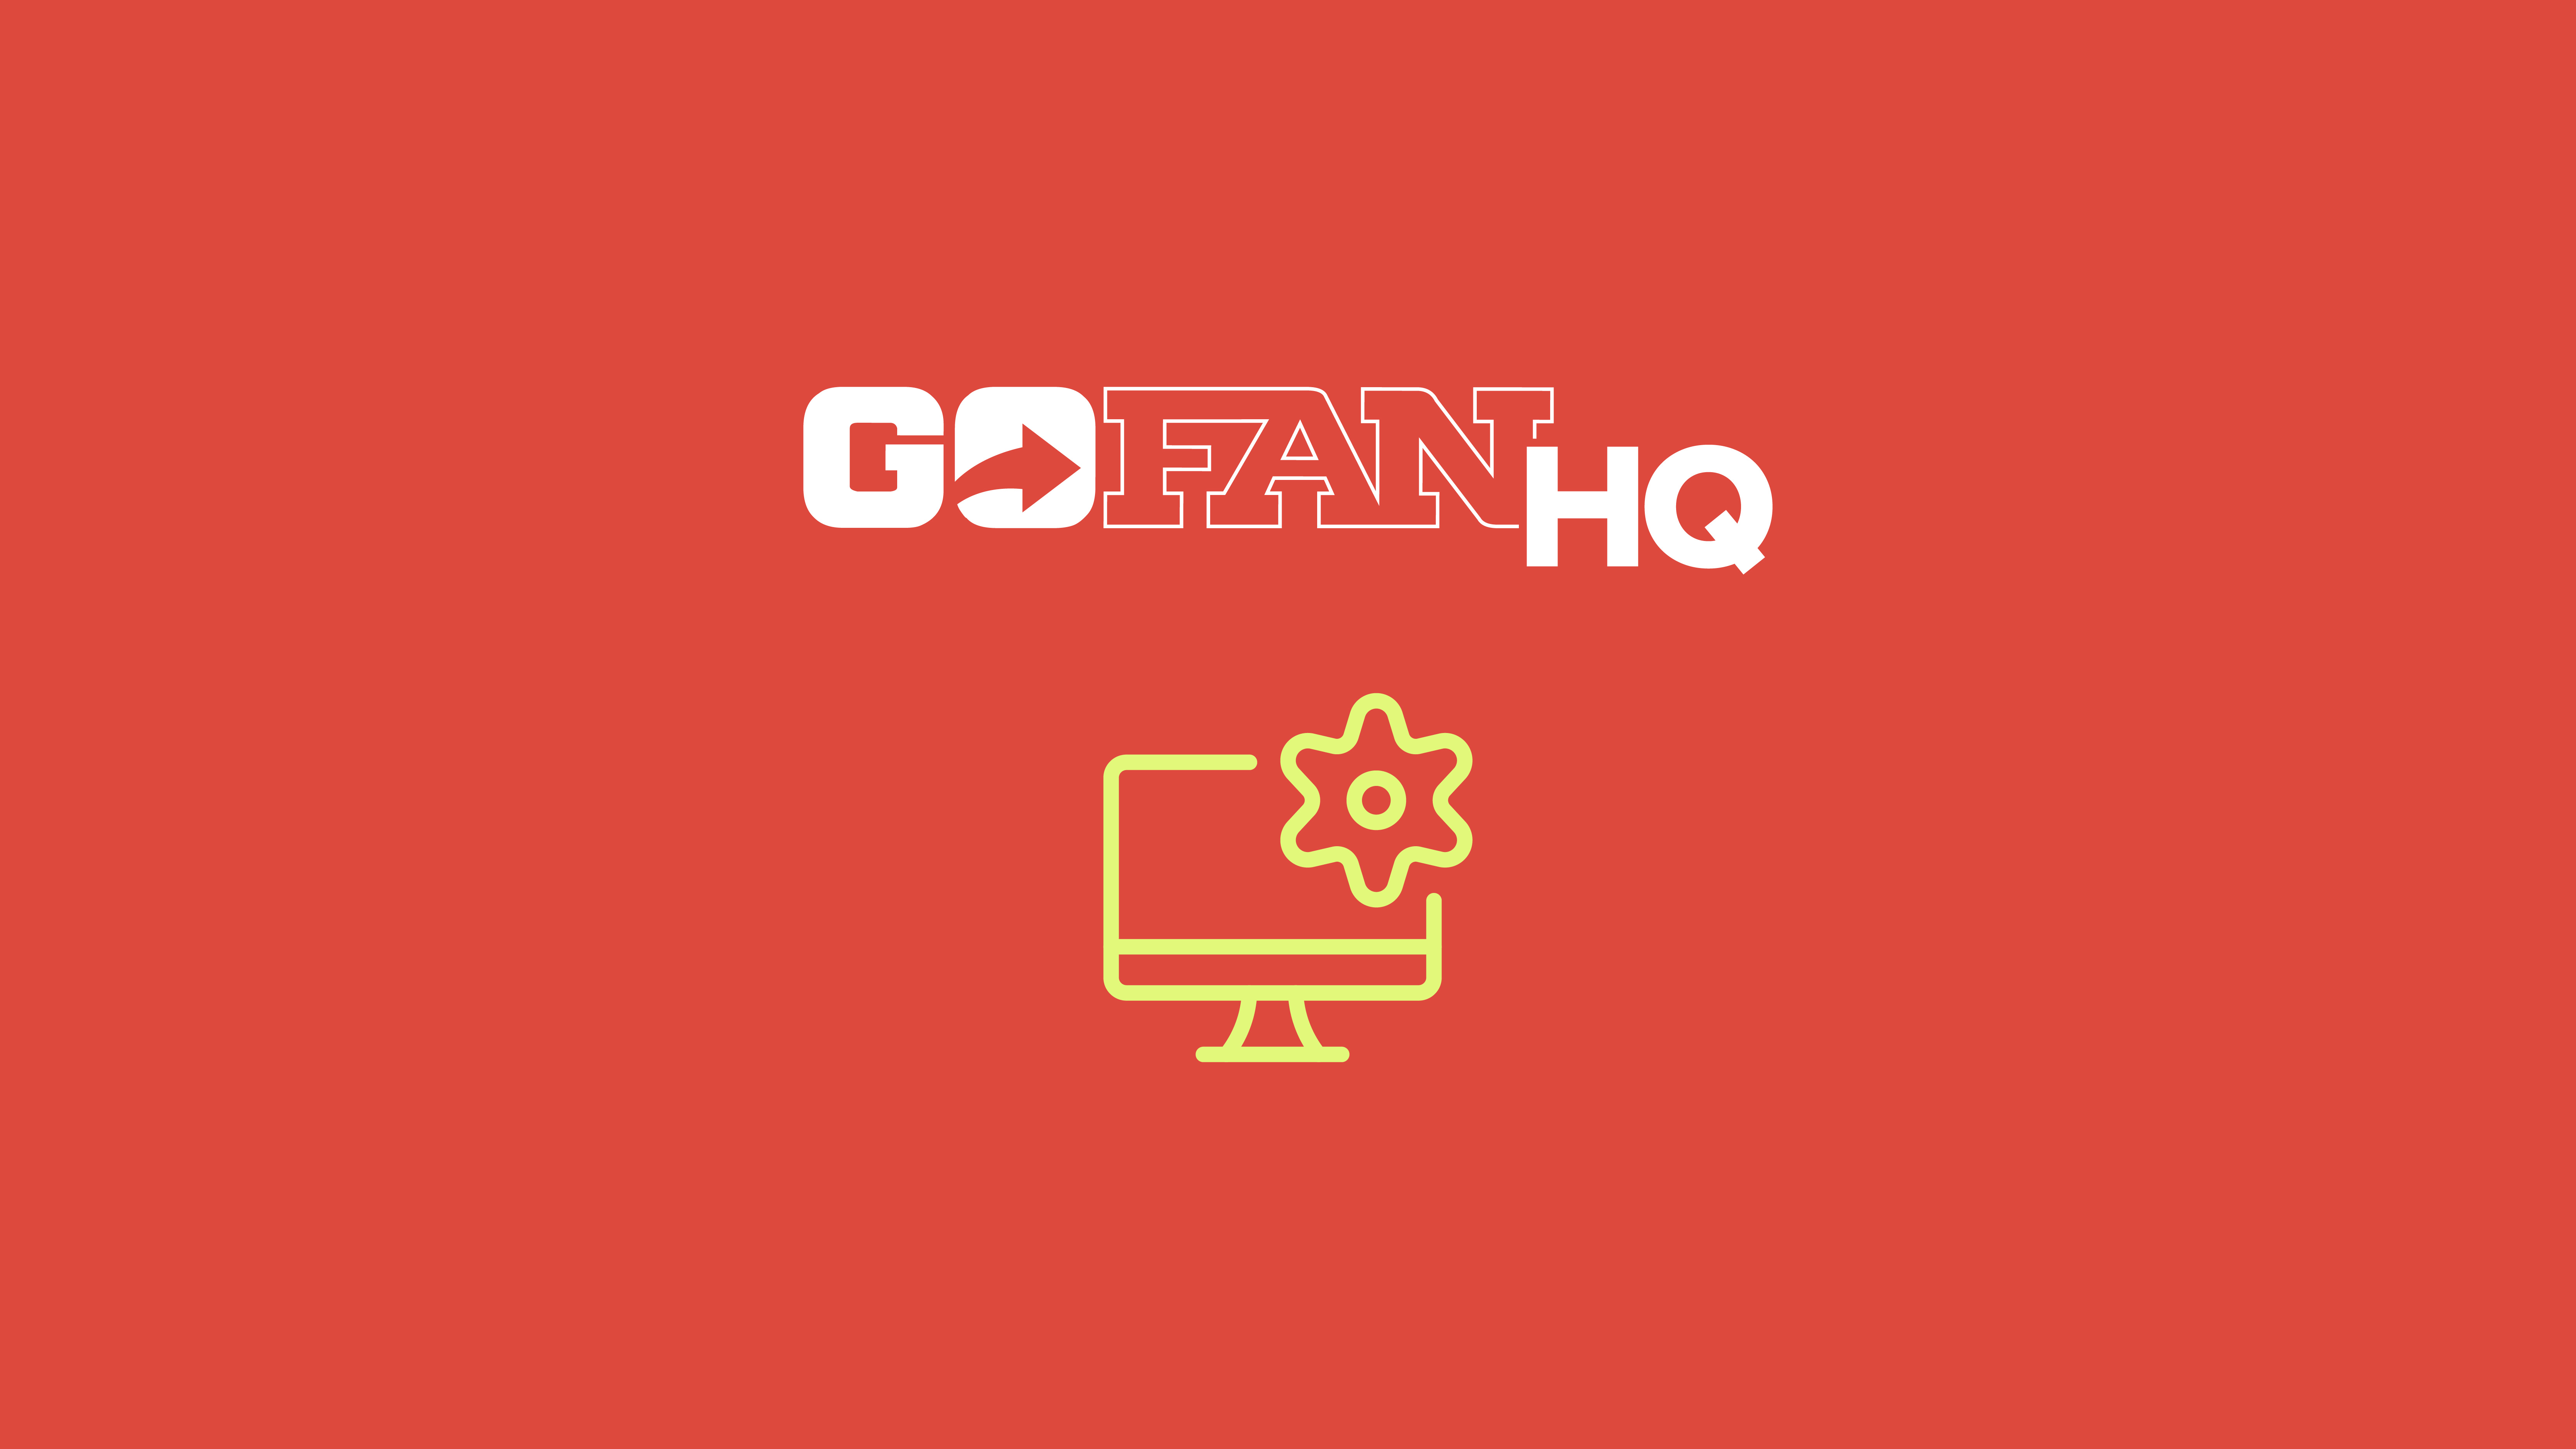 Get Ready for Playoff Season with GoFan HQ!